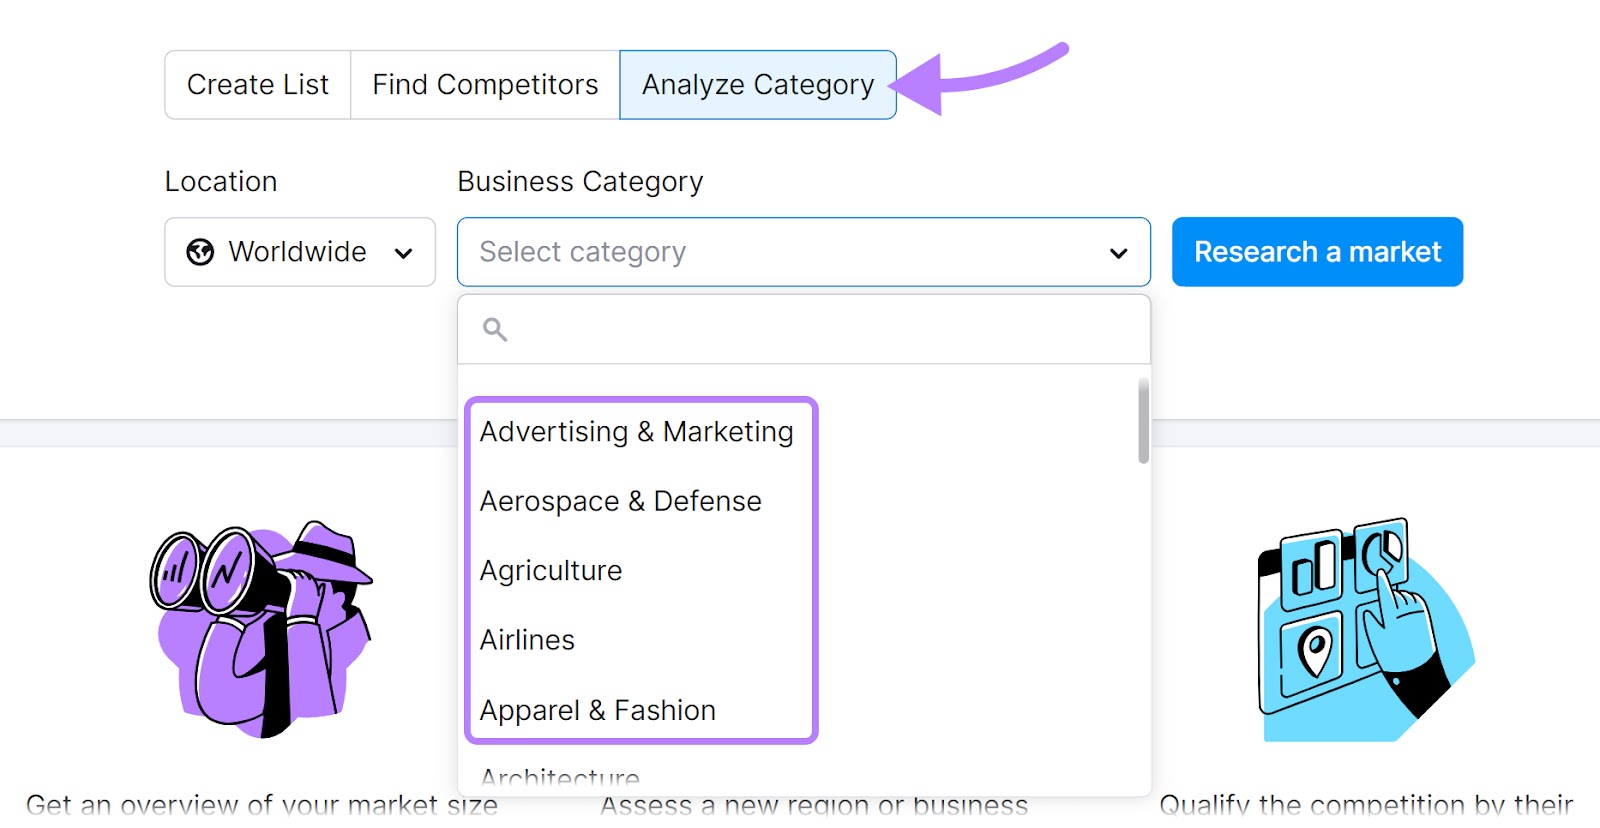 "Analyze Category" drop-down menu in Market Explorer tool